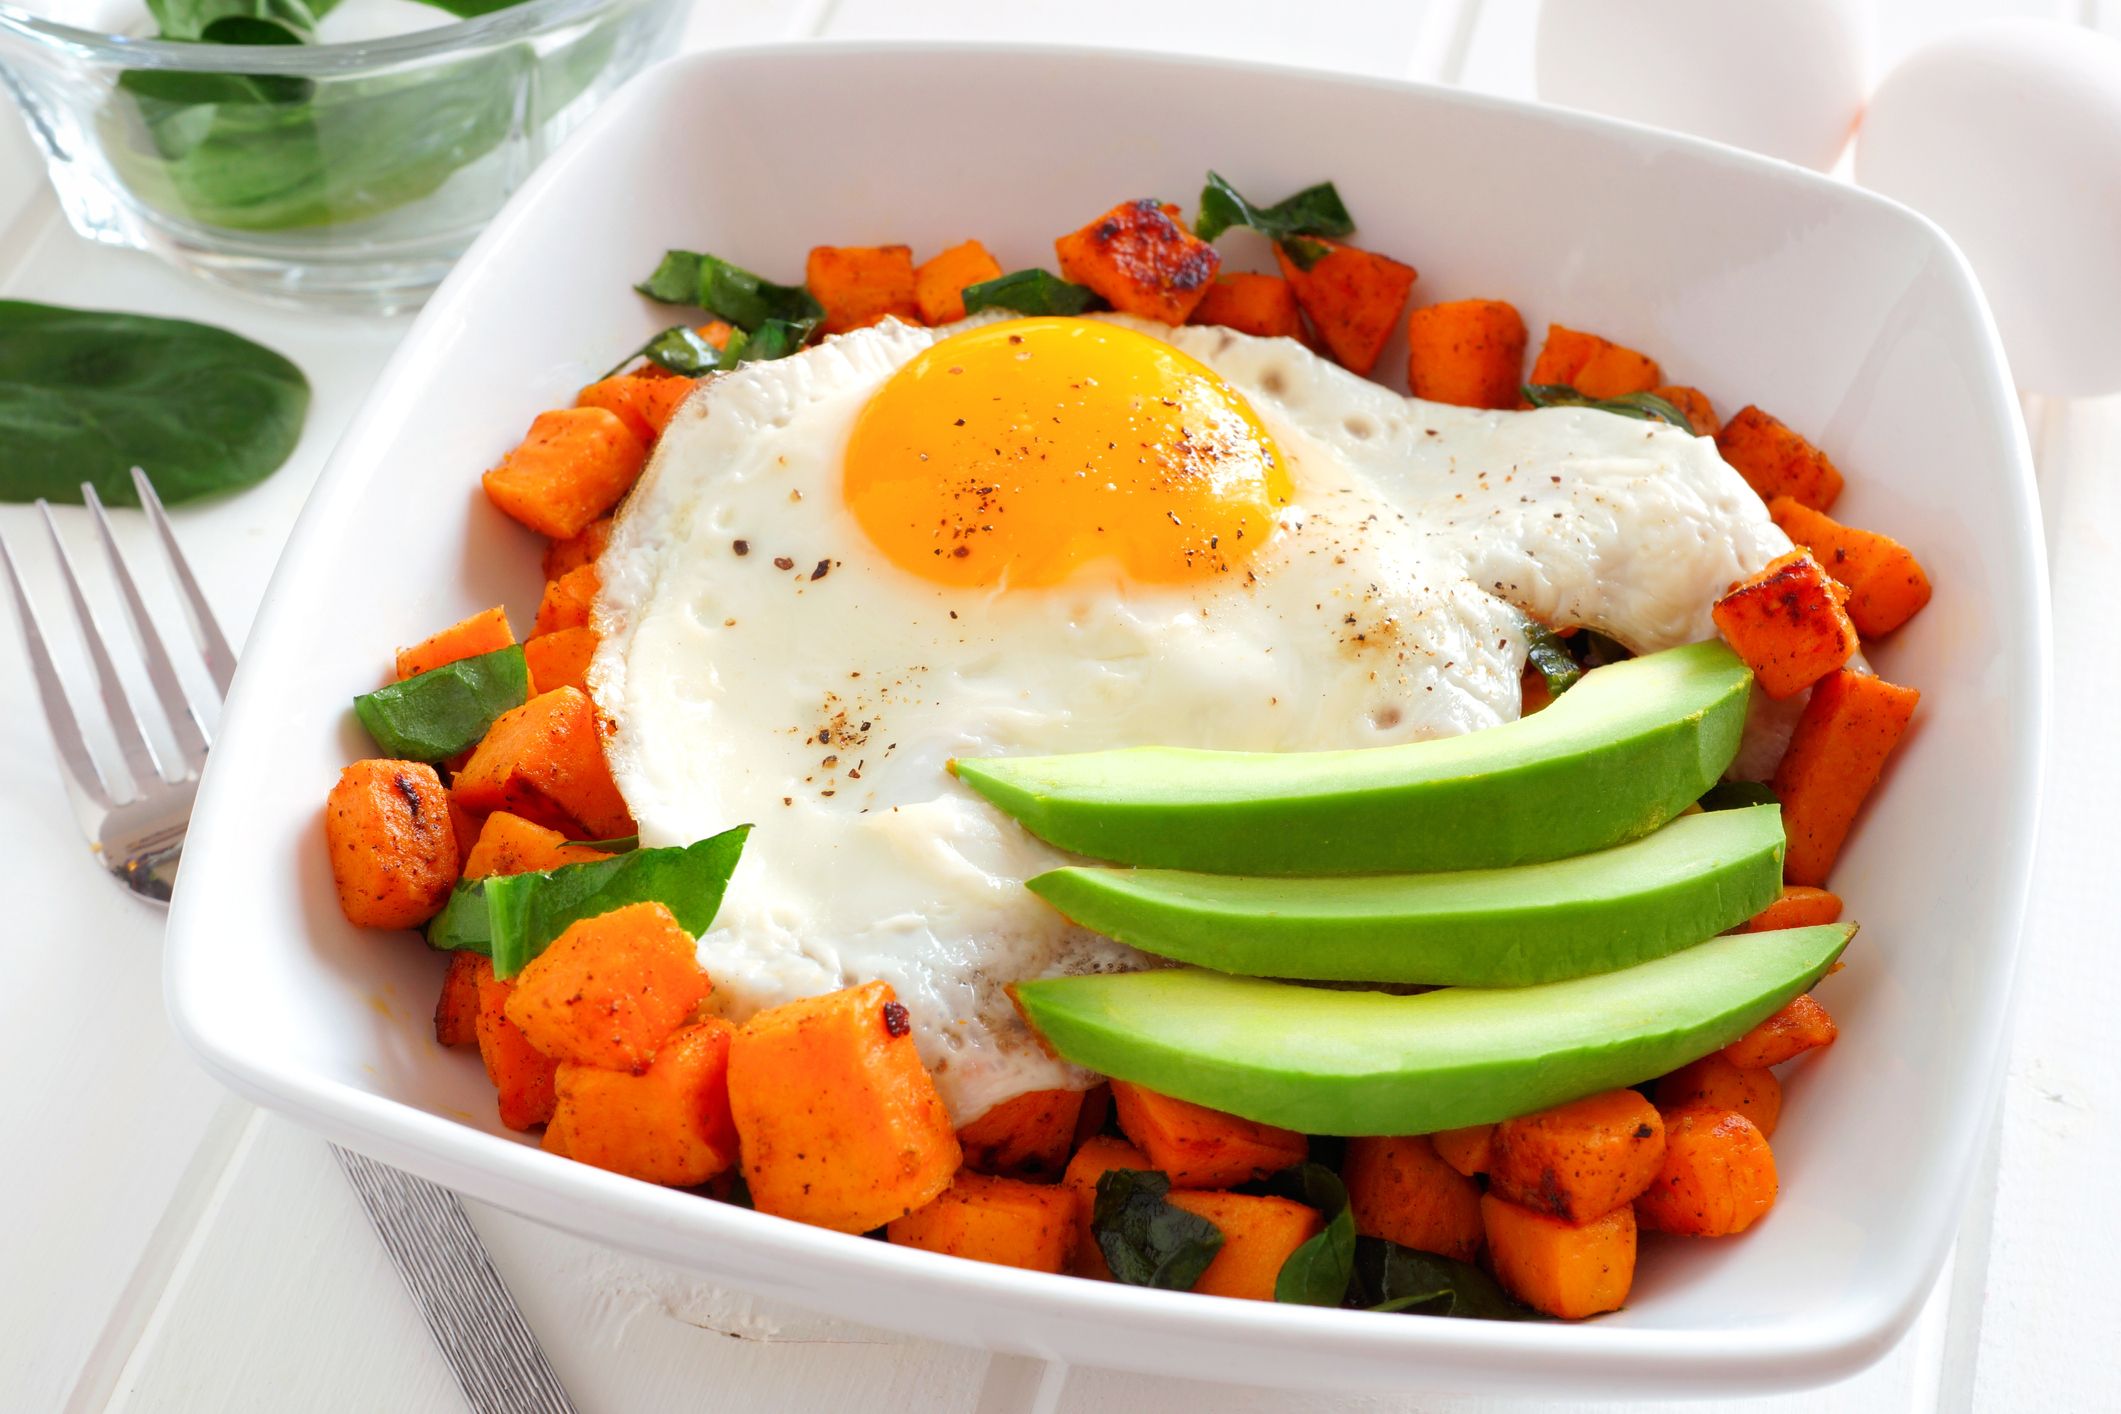 13 Healthy Breakfast Foods - What to Eat for Breakfast